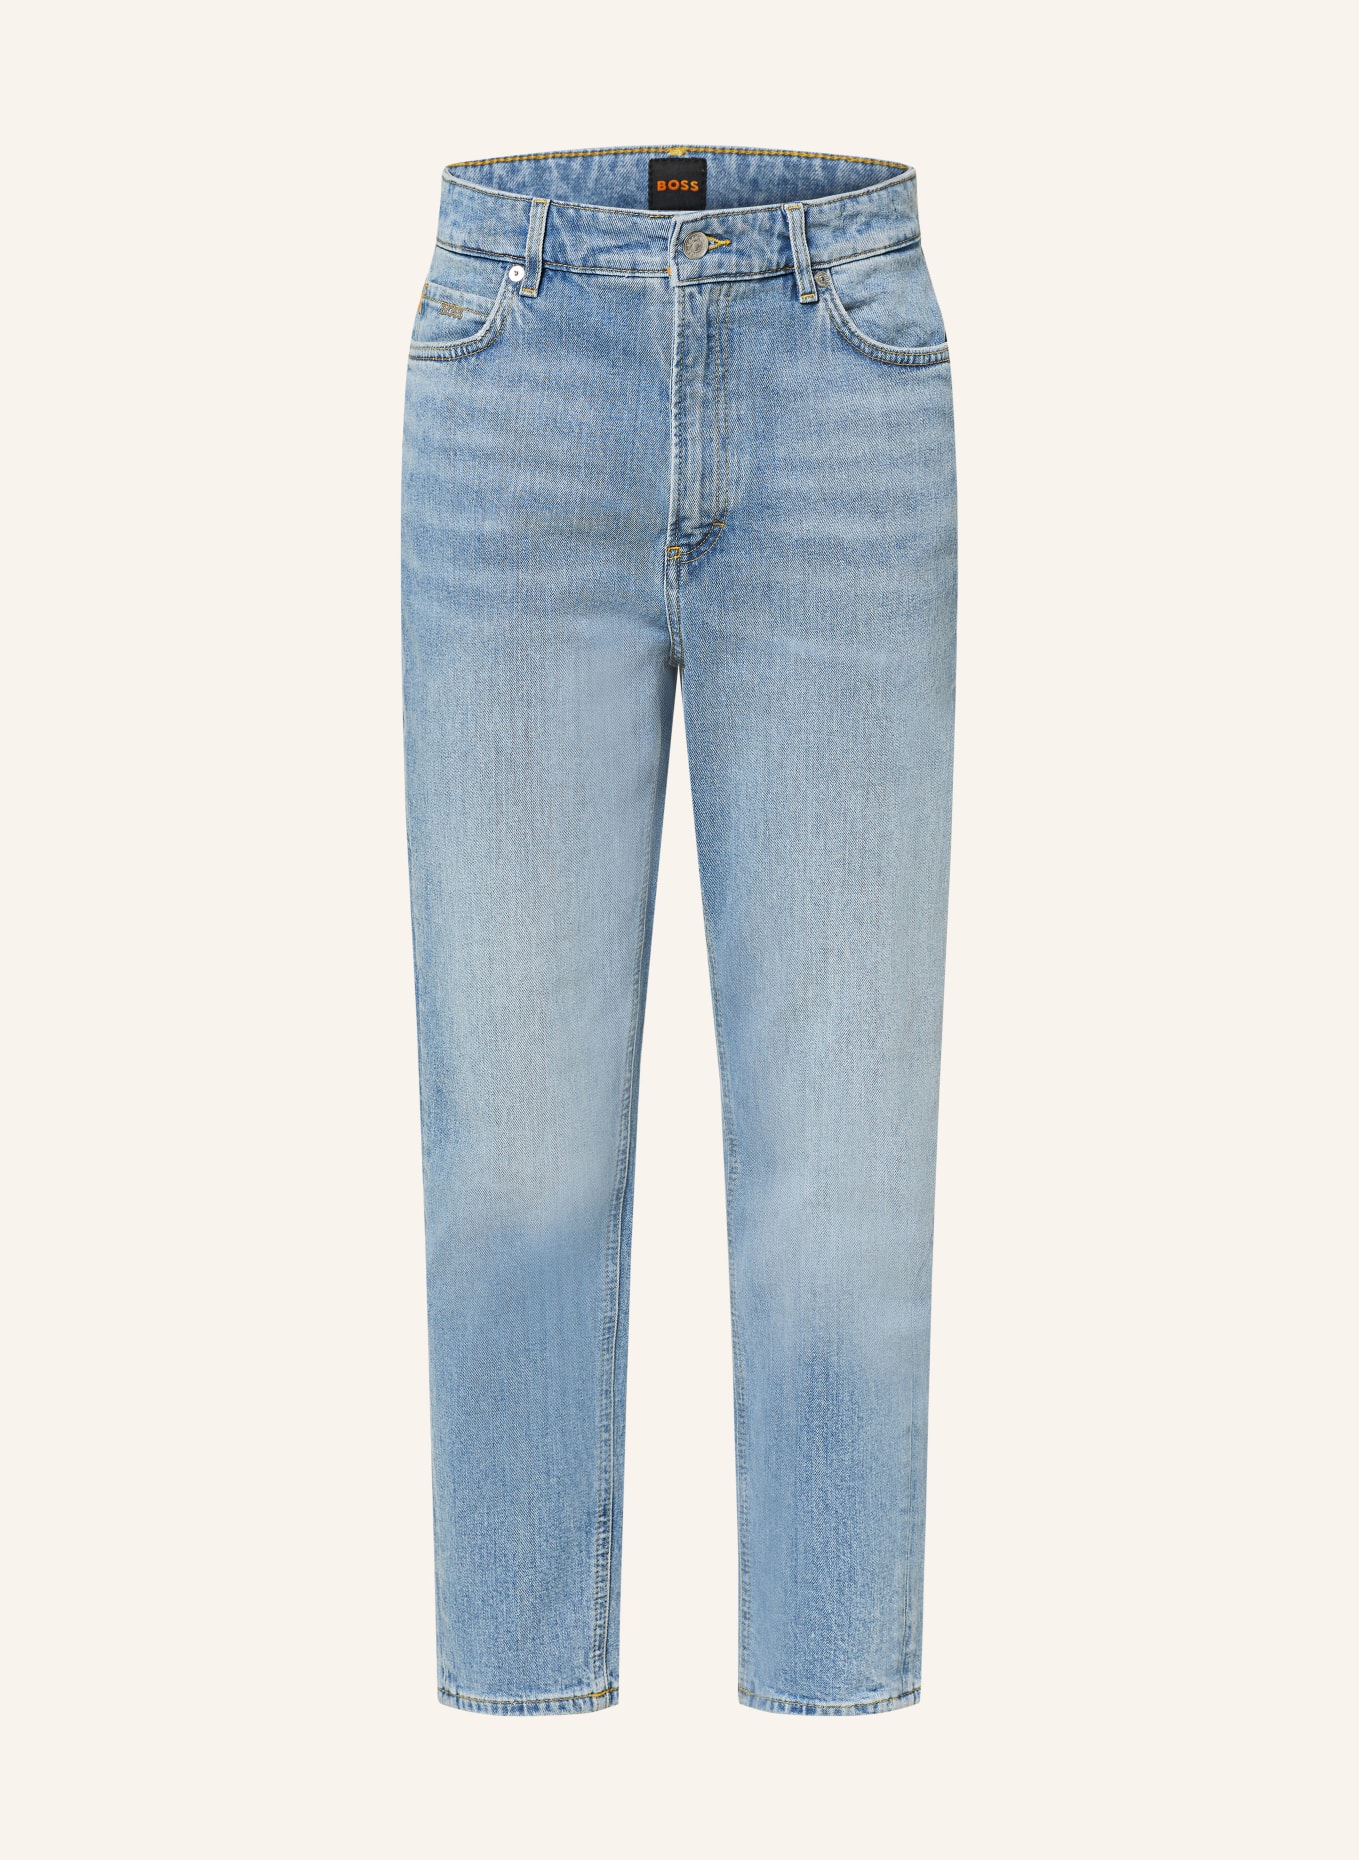 BOSS Mom Jeans RUTH, Farbe: 457 LIGHT/PASTEL BLUE (Bild 1)